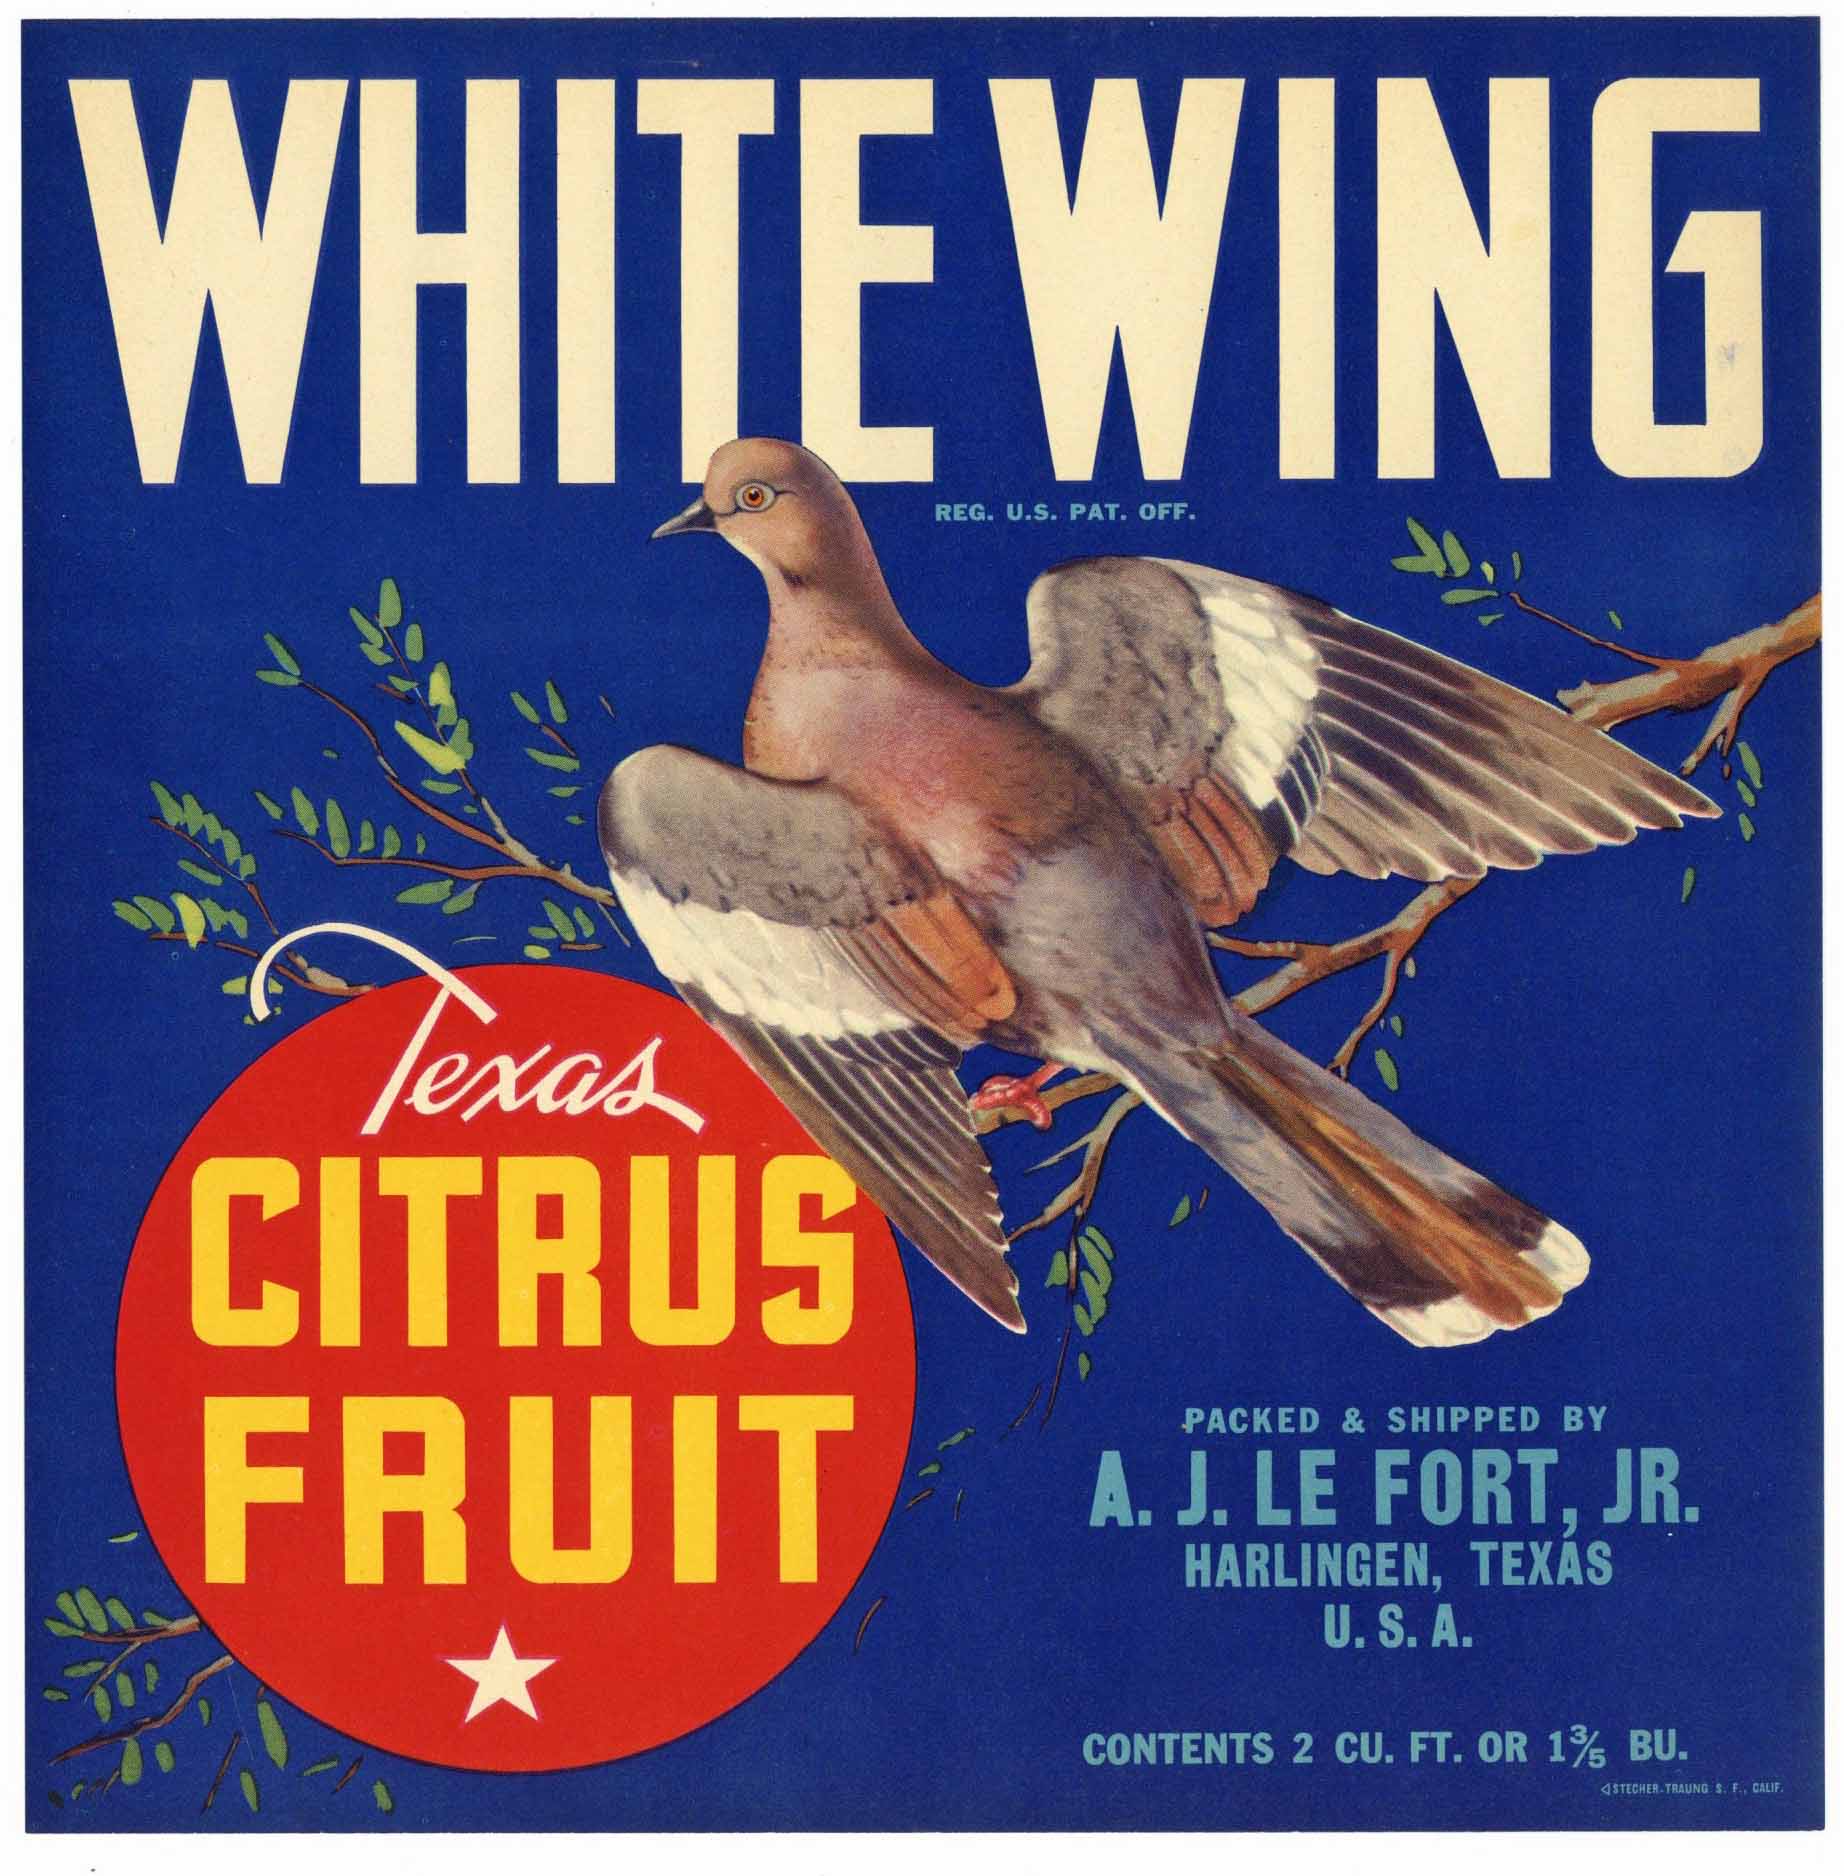 White Wing Brand Vintage Harlingen Texas Citrus Crate Label